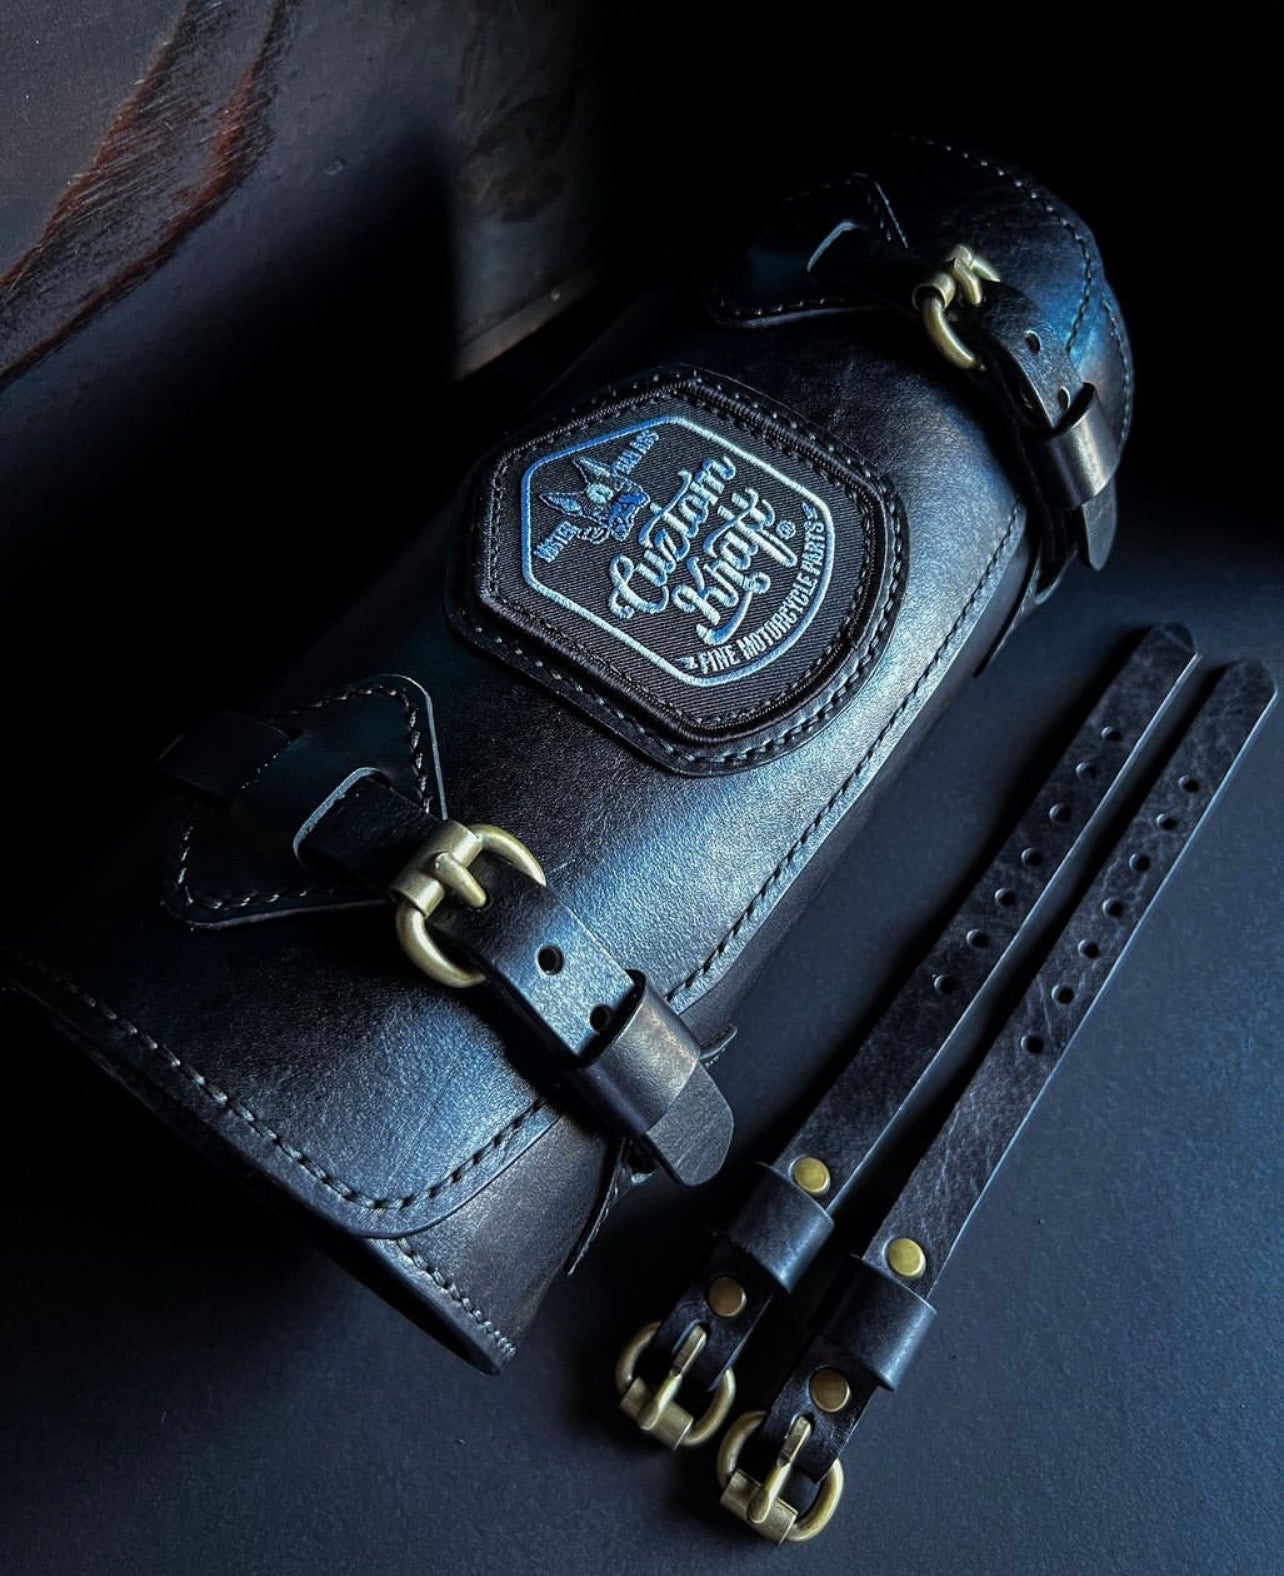 A Cuztom Kraft black leather belt with brass buckles on it.